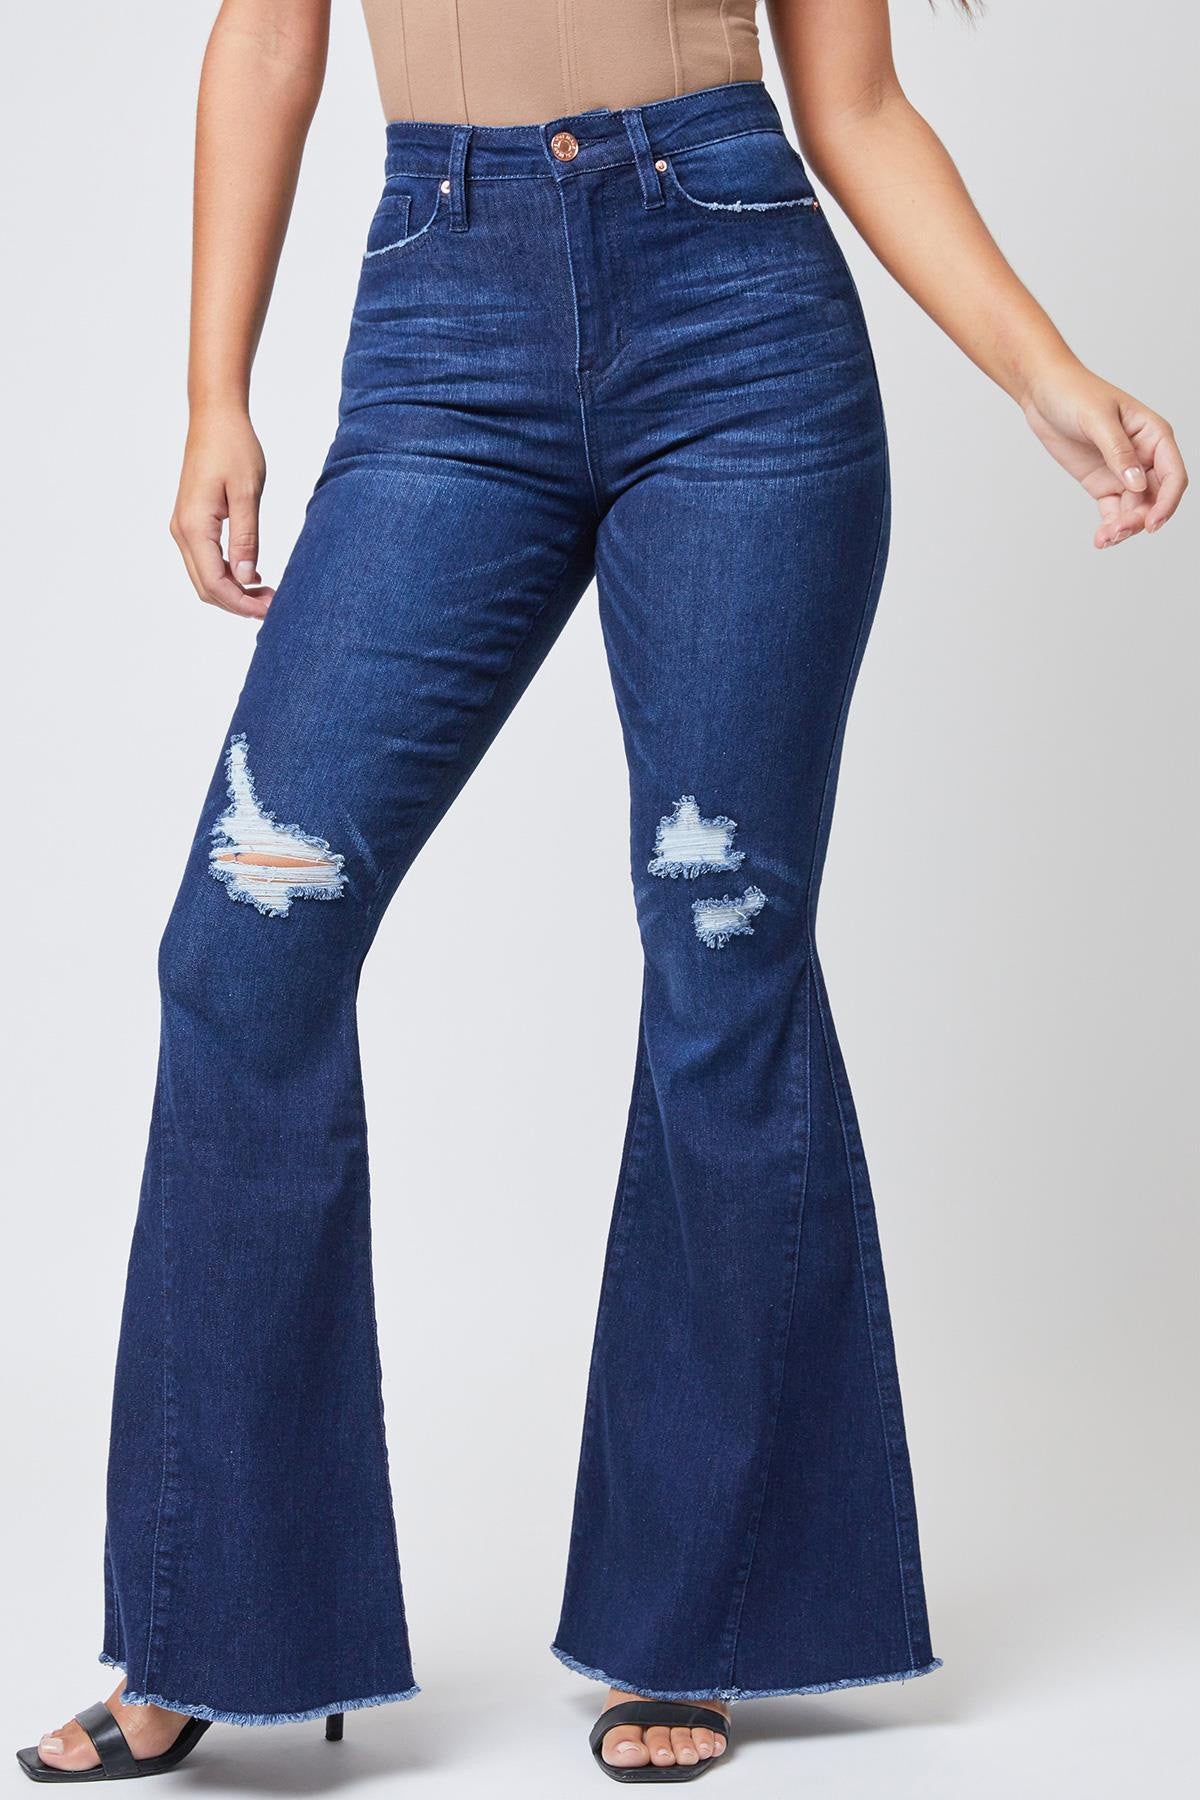 YMI Jeans Women's Plus High Rise Distressed Super Flare Jean